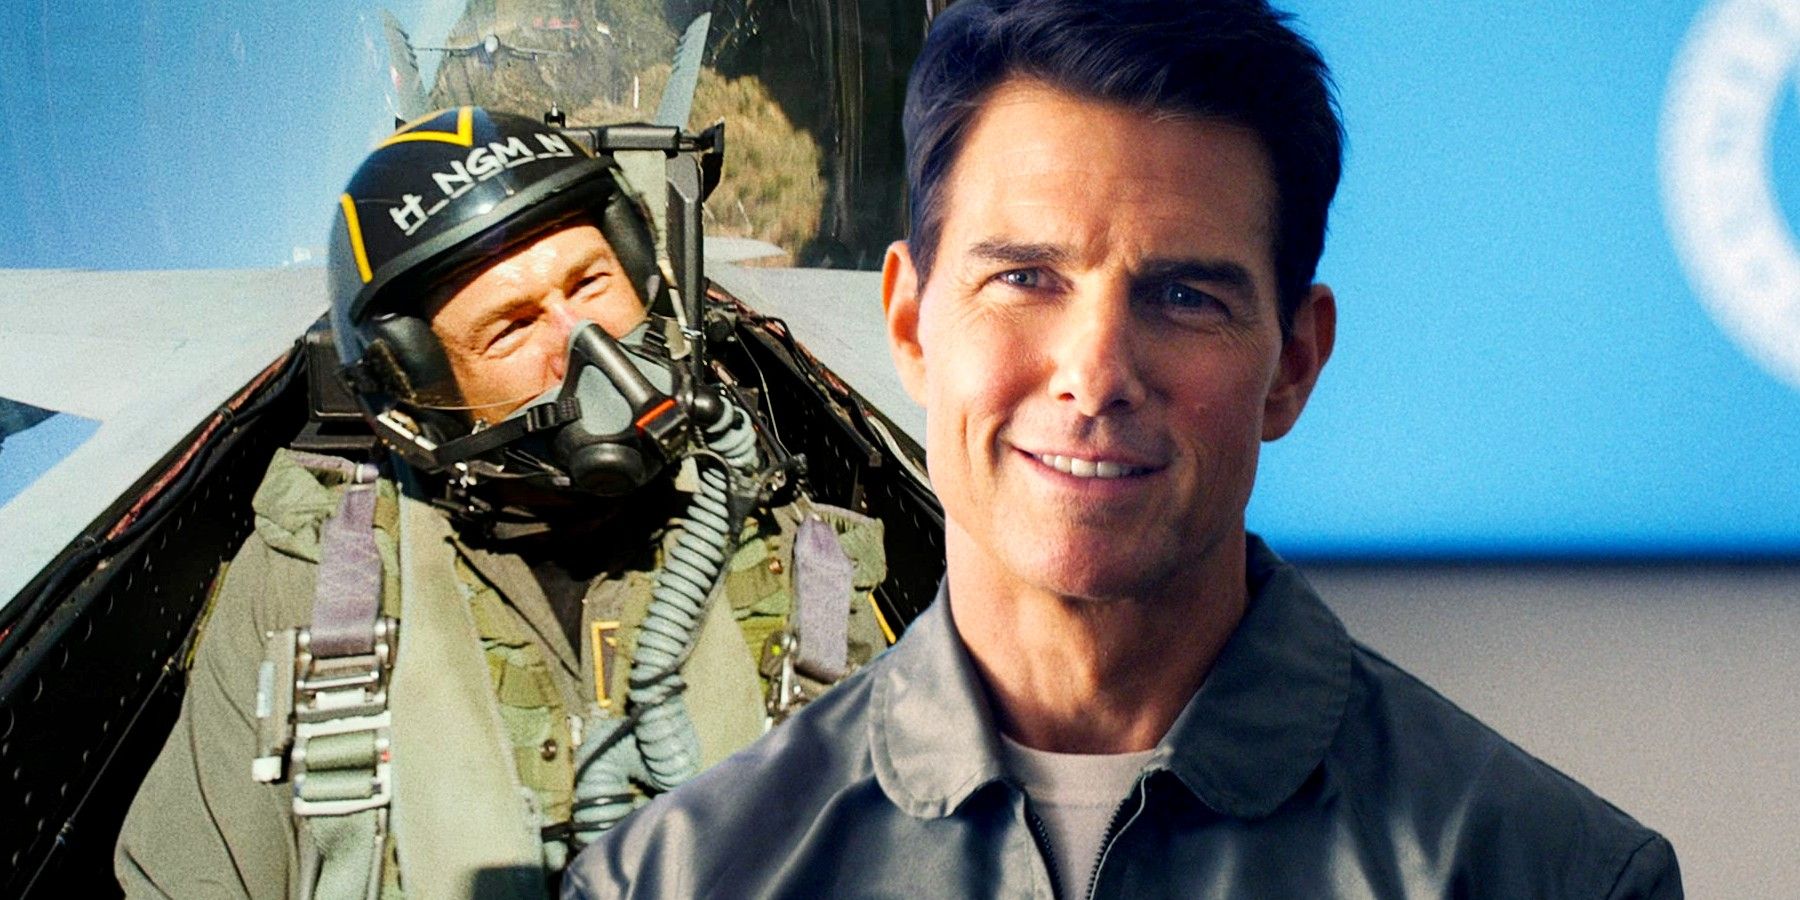 Tom Cruise's 'Top Gun: Maverick' not far off from real deal